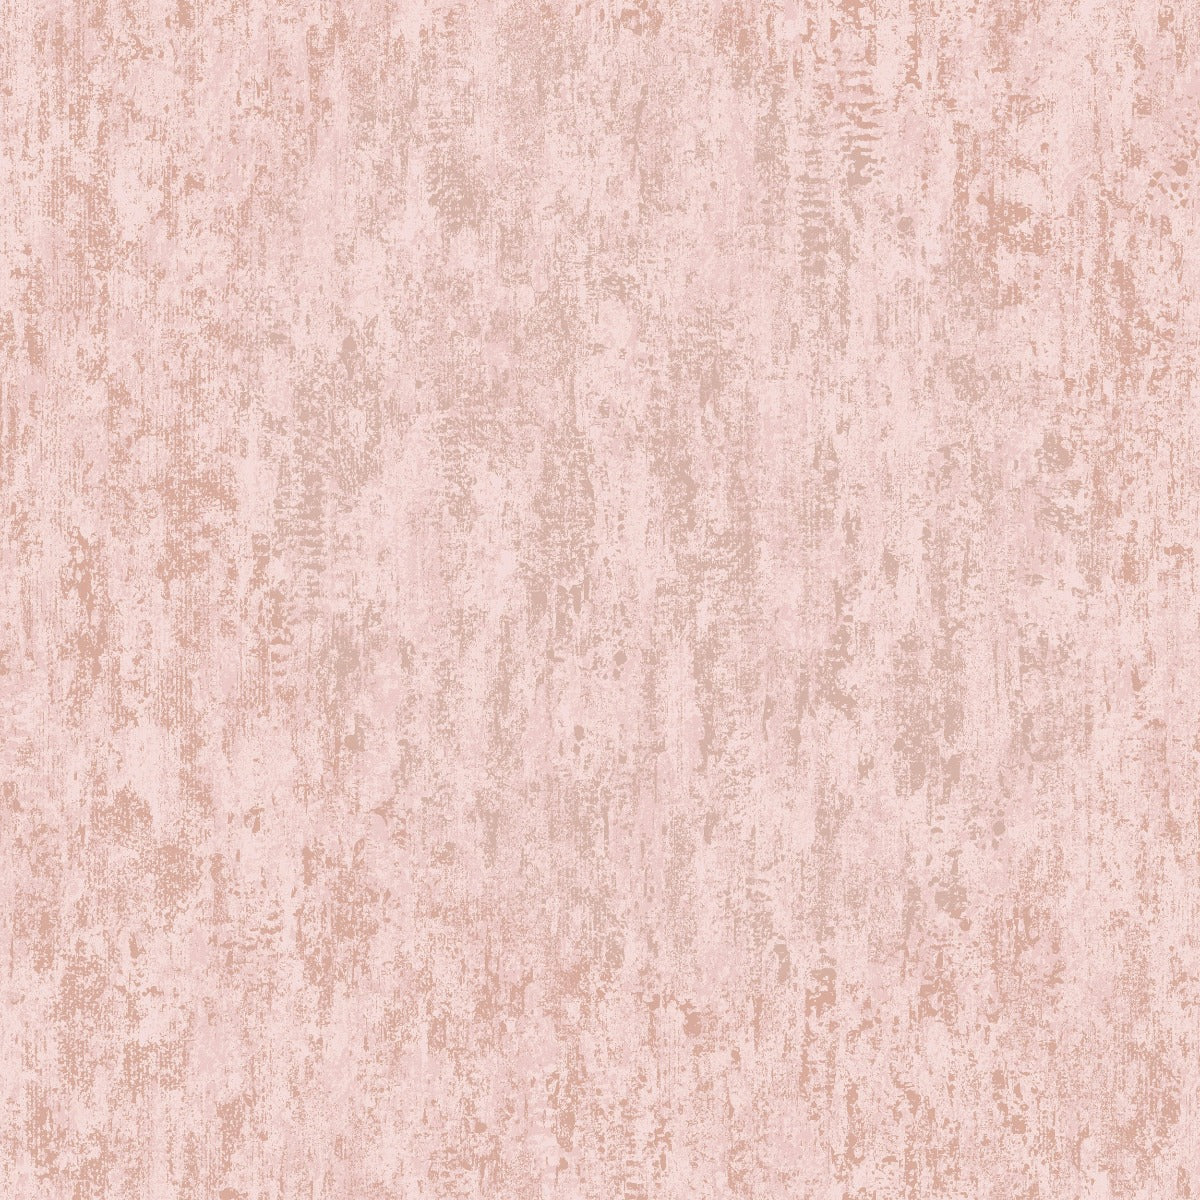 Industrial Texture Blush Pink | WonderWall by Nobletts  | Holden